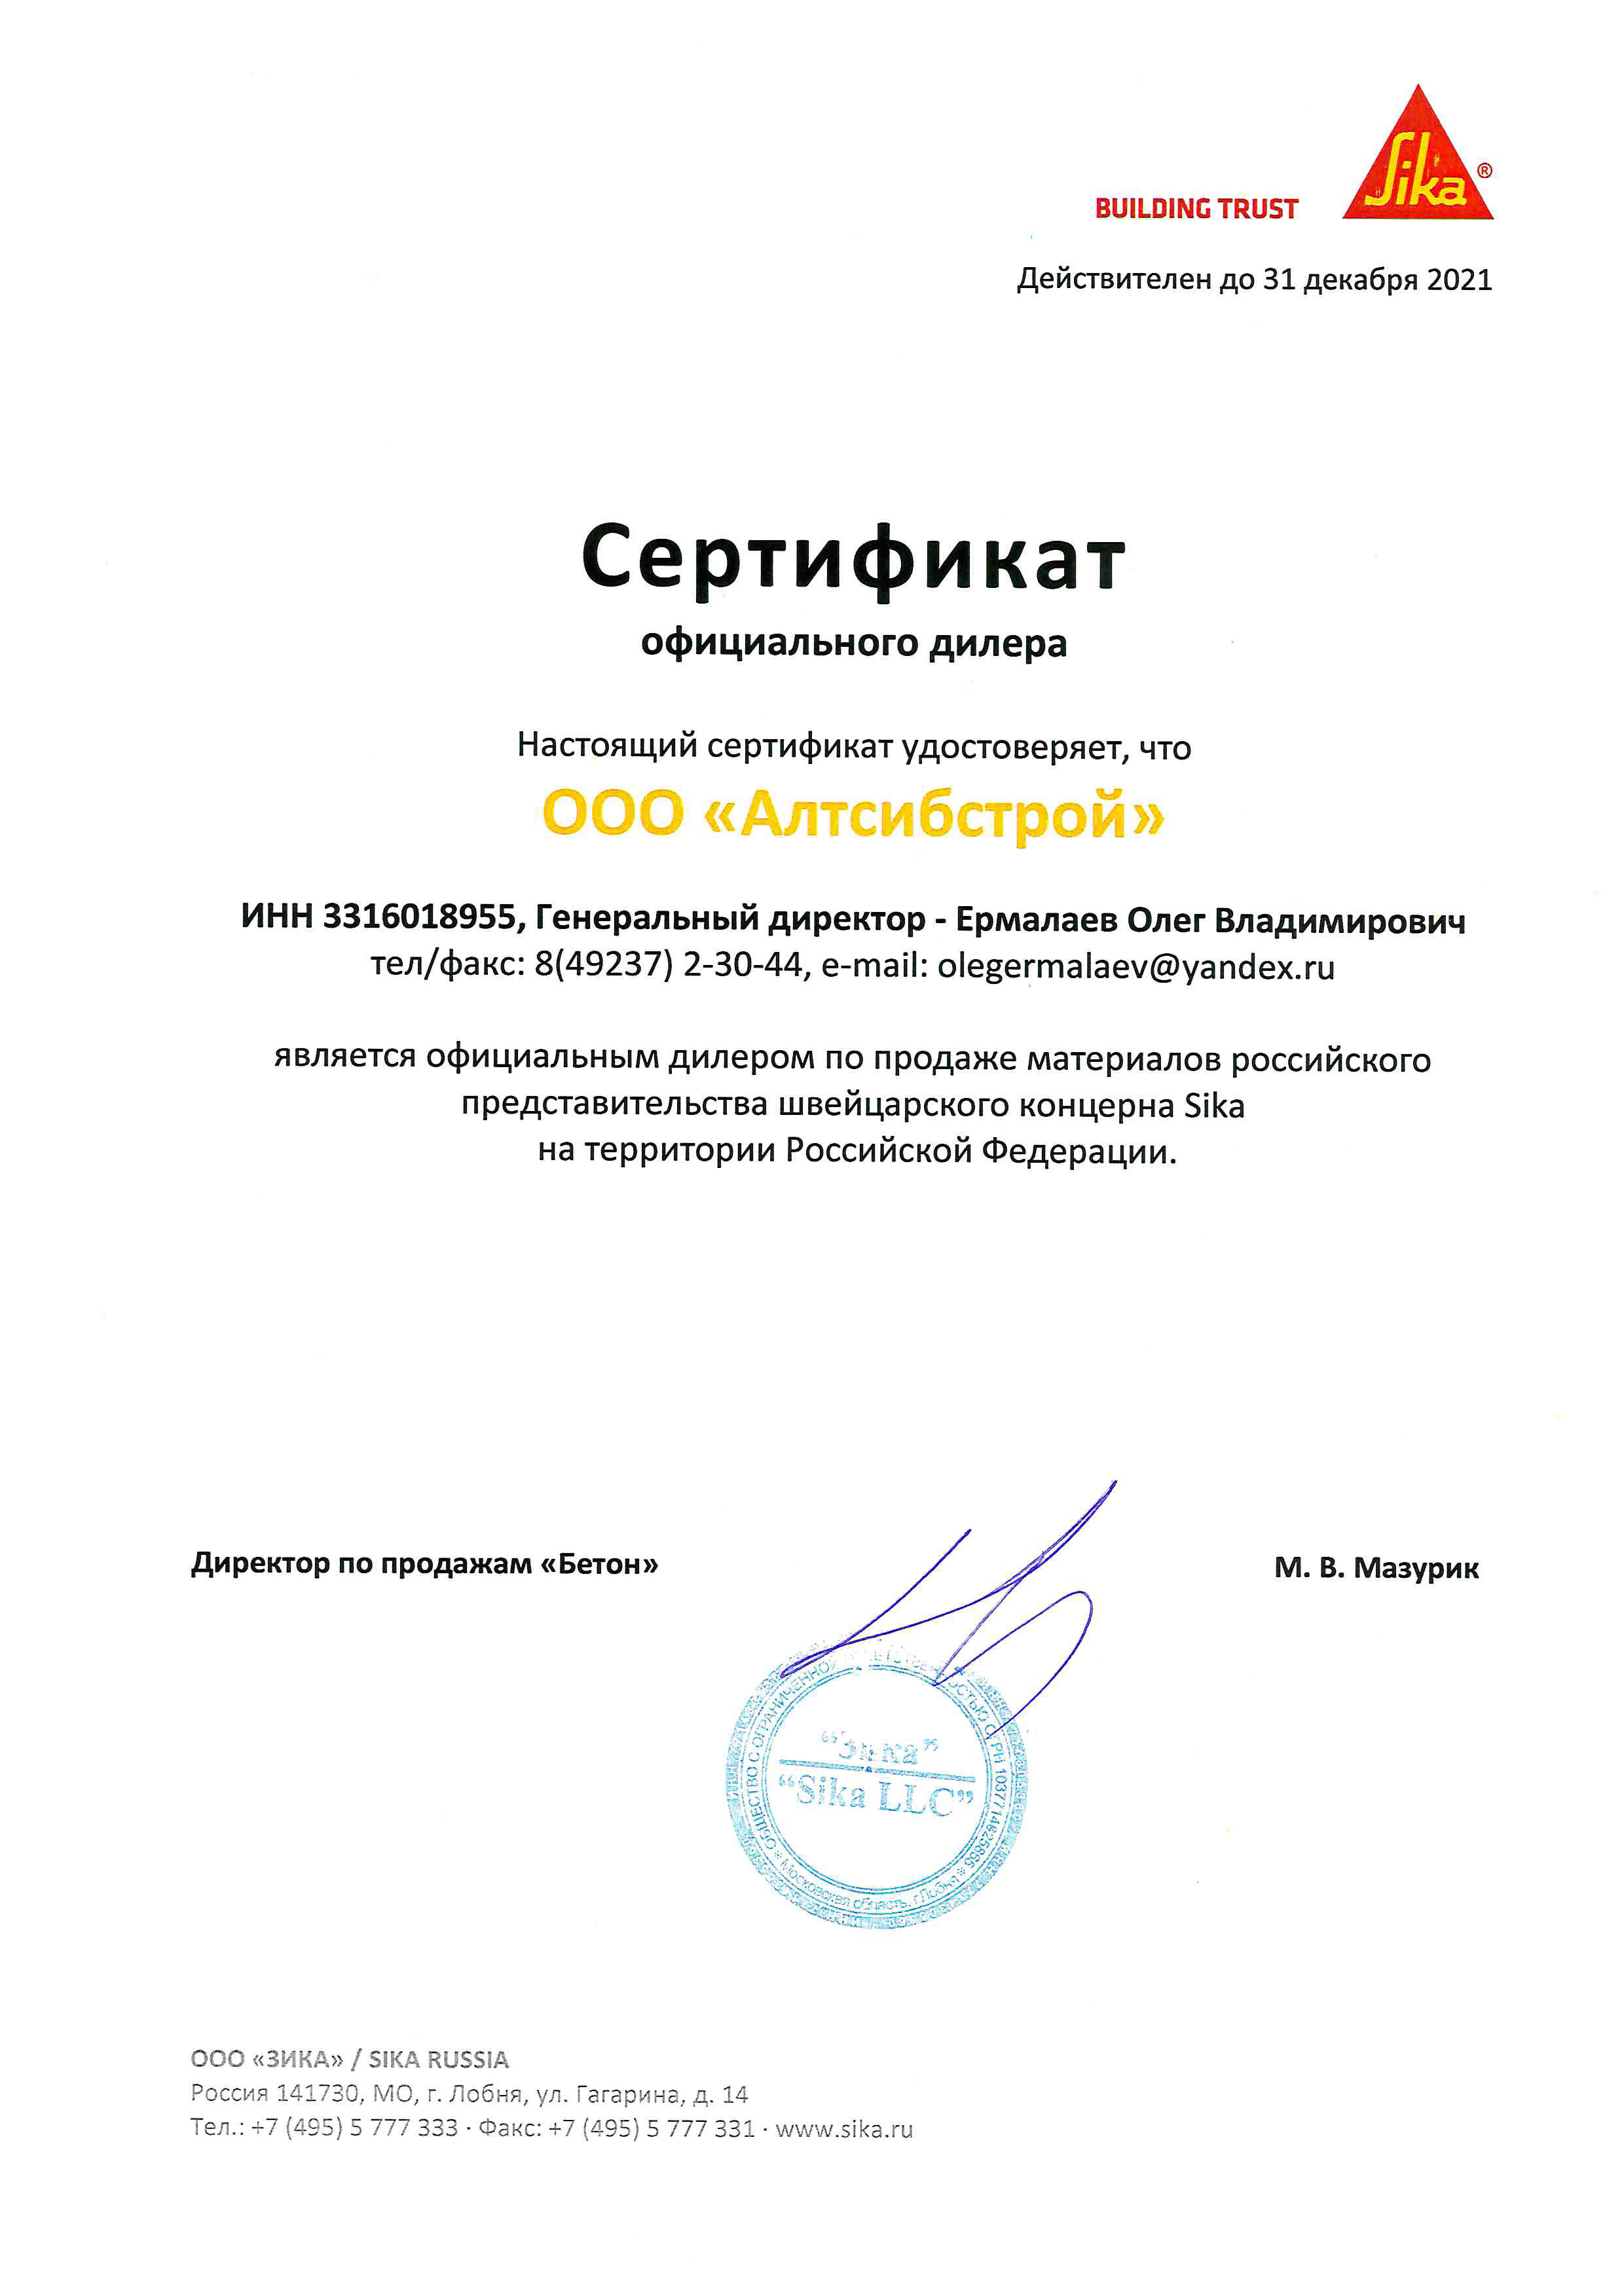 Сертификат дилера на 2021 год